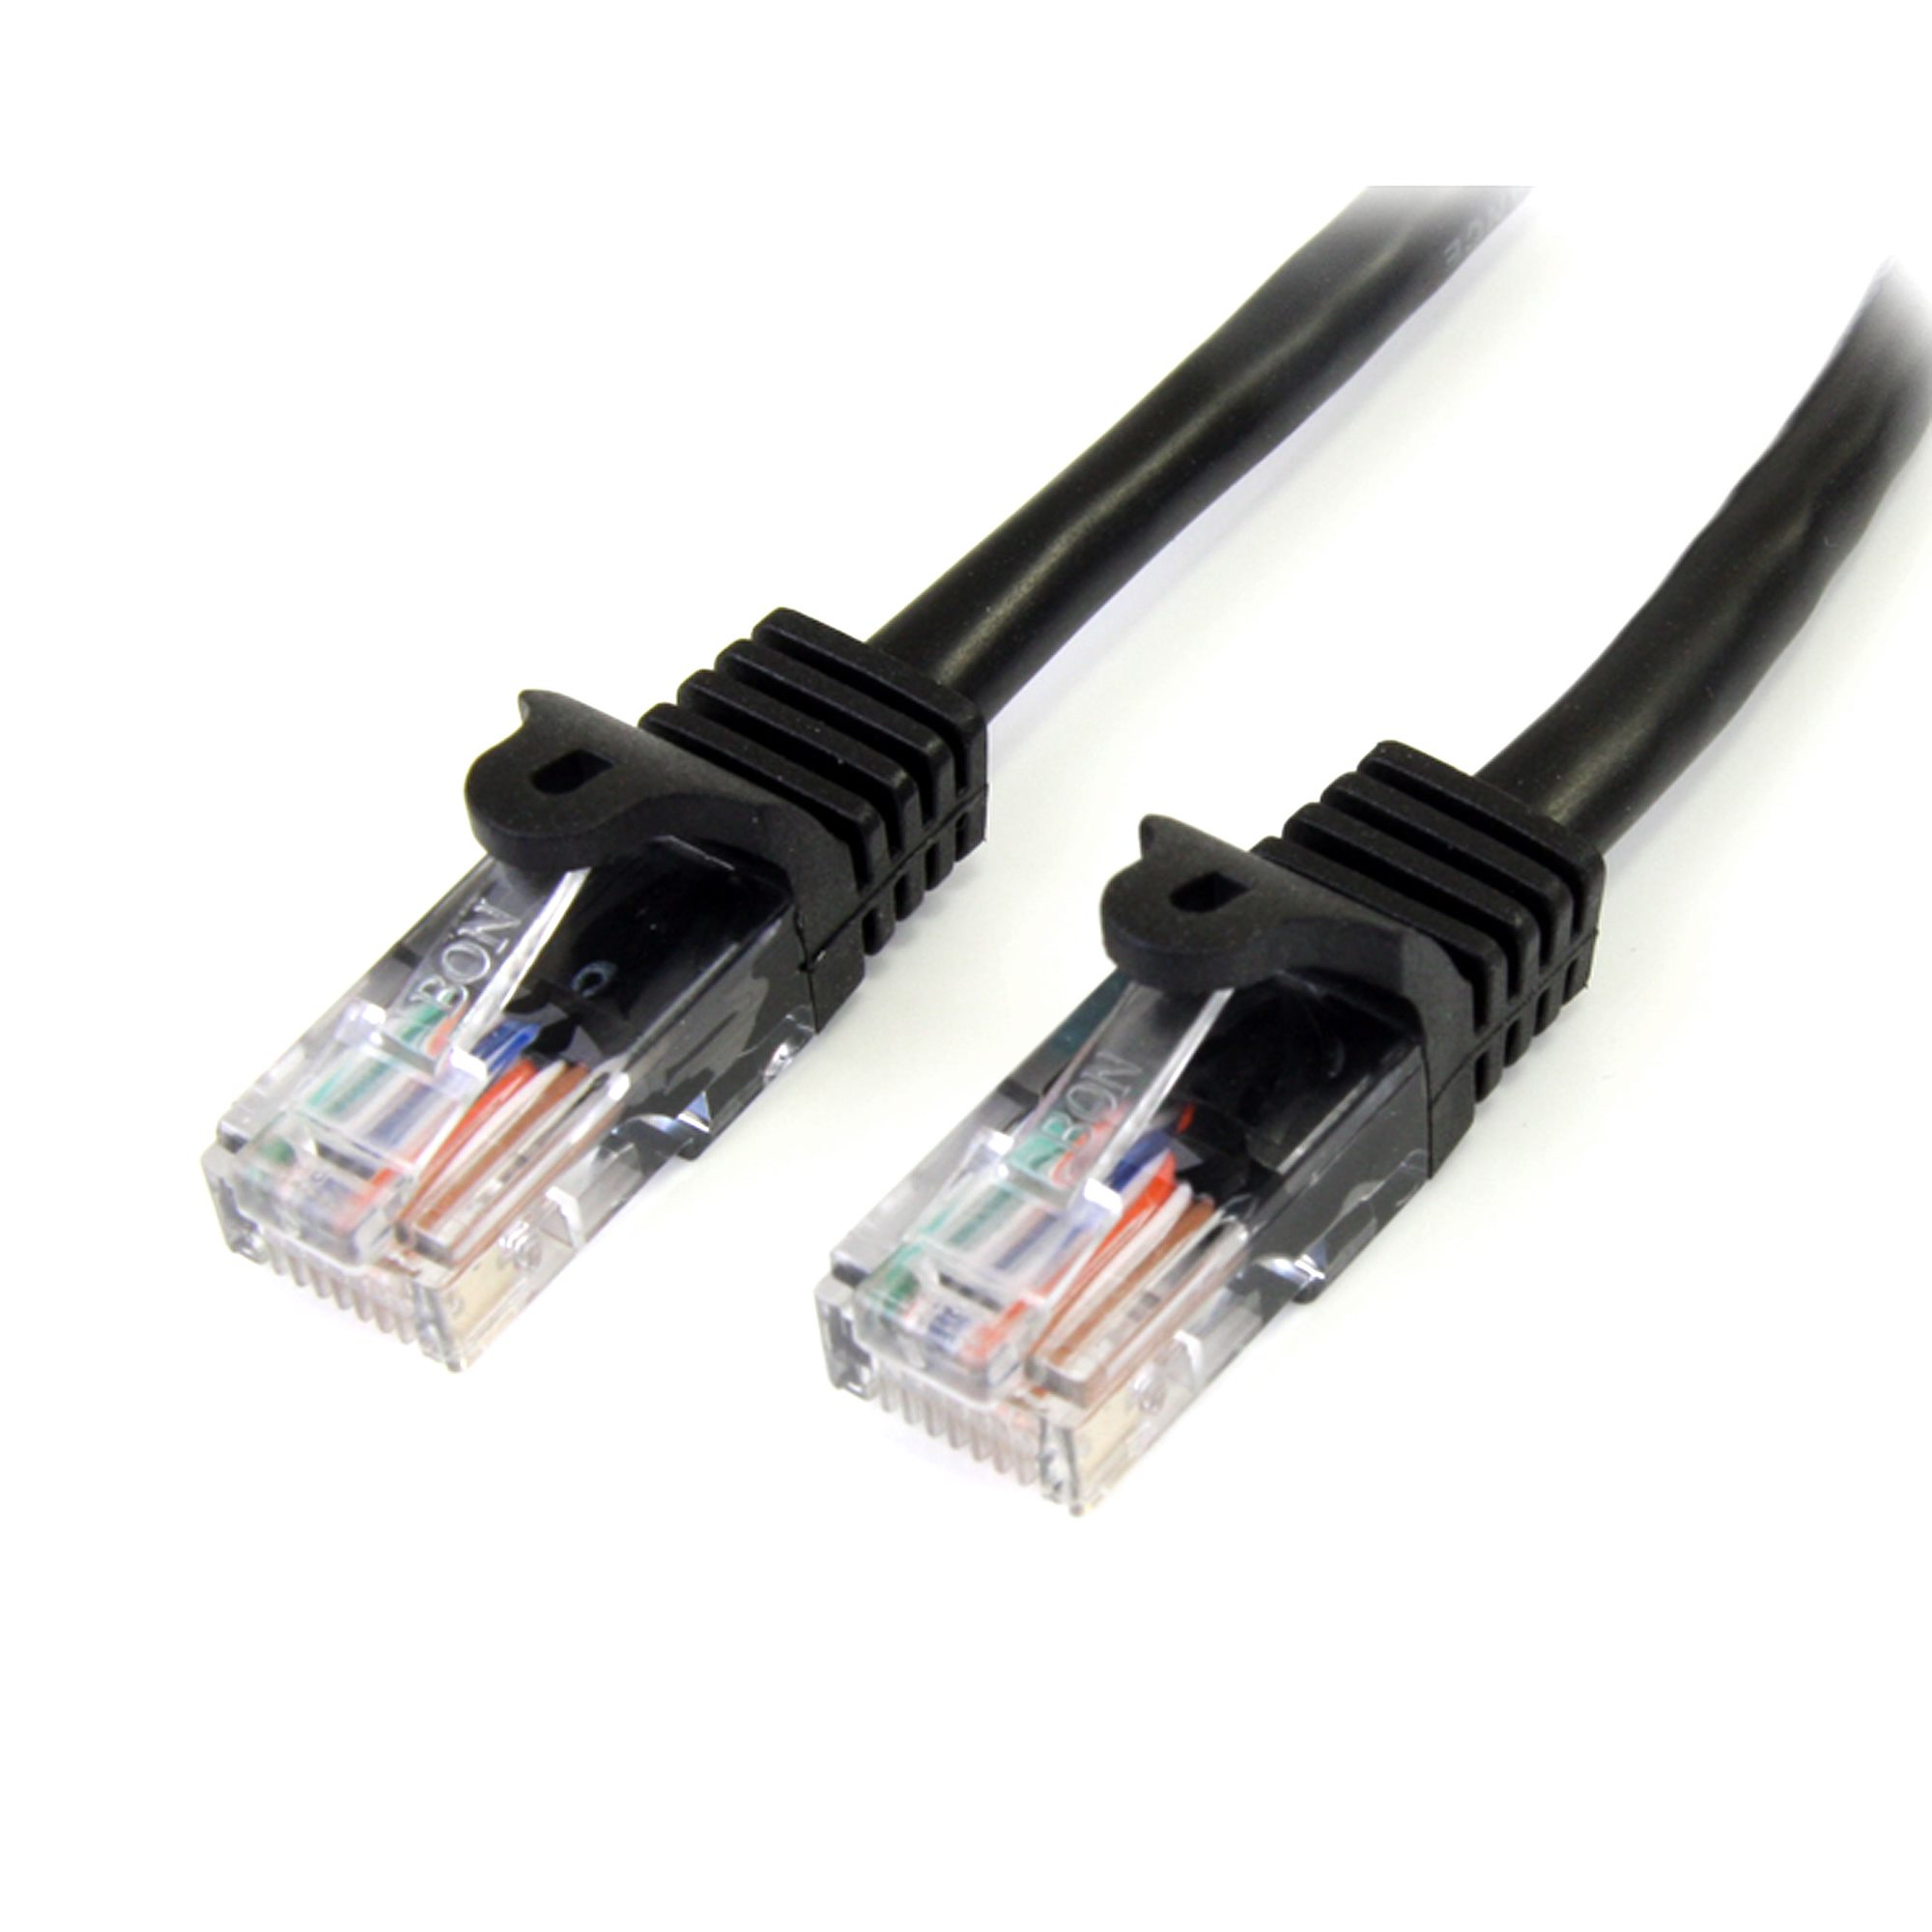 StarTech.com 0,5m Cat5e Ethernet Netzwerkkabel Snagless mit RJ45 - Cat 5e UTP Kabel - Schwarz - Patch-Kabel - RJ-45 (M)